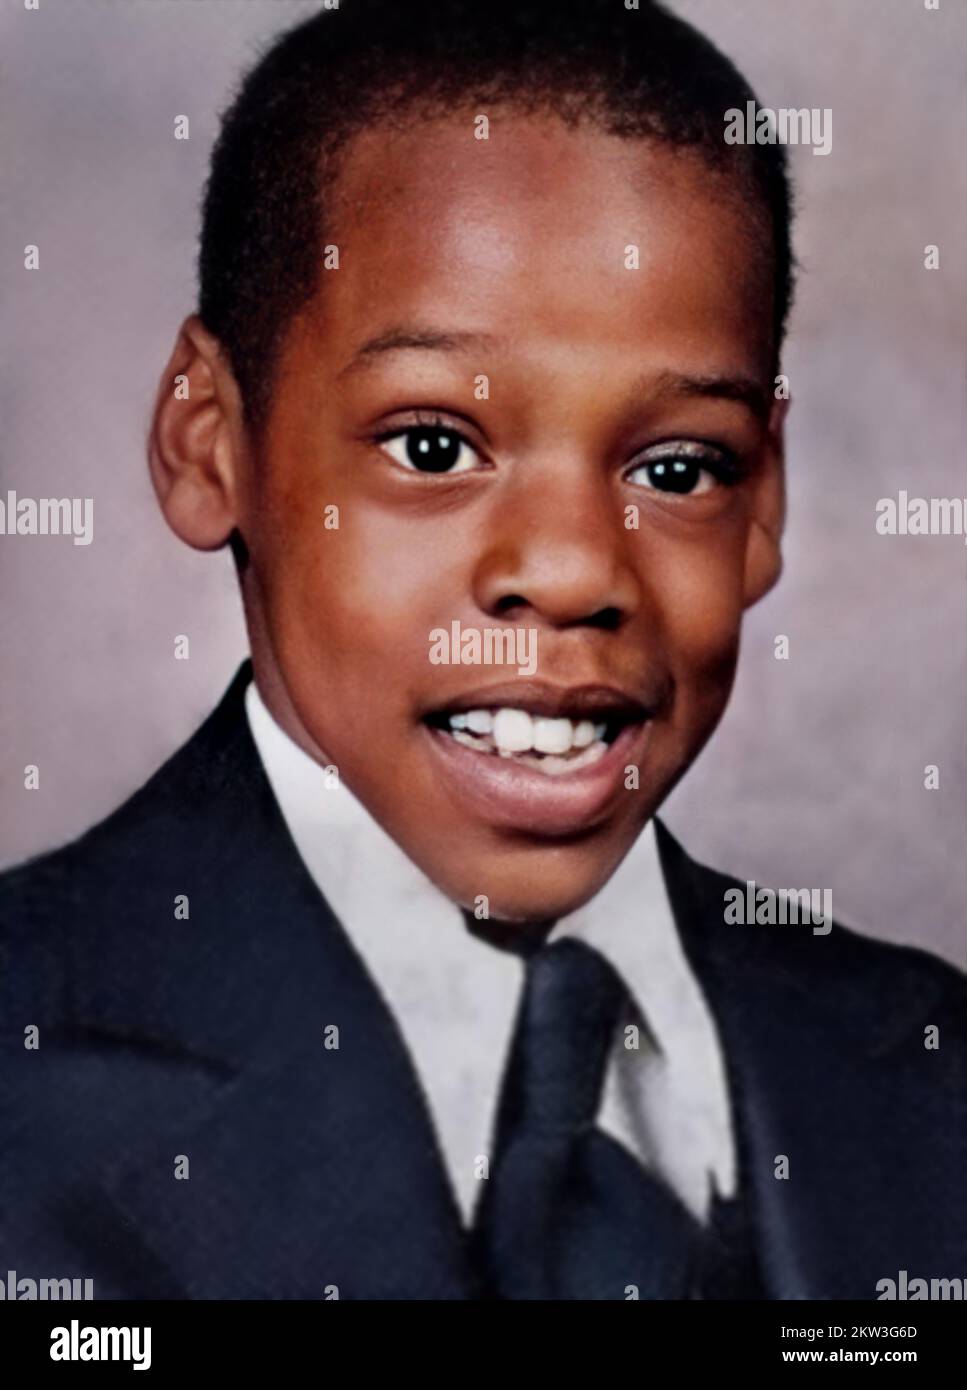 1979 ca , USA : The famous american Rapper singer , composer and producer JAY-Z Shawn Corey Carter ( born 4 december 1969 ), when was a young boy aged 10 . Married with celebrated singer Beyoncé in 2008 . Unknown photographer. - PORTRAIT - RITRATTO - MUSIC - MUSICA SOUL - RAP - RAPPER - HIP HOP - Hip-Hop - PRODUTTORE DISCOGRAFICO - PRODUCER - FOTO STORICHE - when was young - celebrities celebrity - celebrità personaggi famosi da giovane giovani - da bambino bambini - CHILD - CHILDREN - CHILDHOOD - INFANZIA --- ARCHIVIO GBB Stock Photo